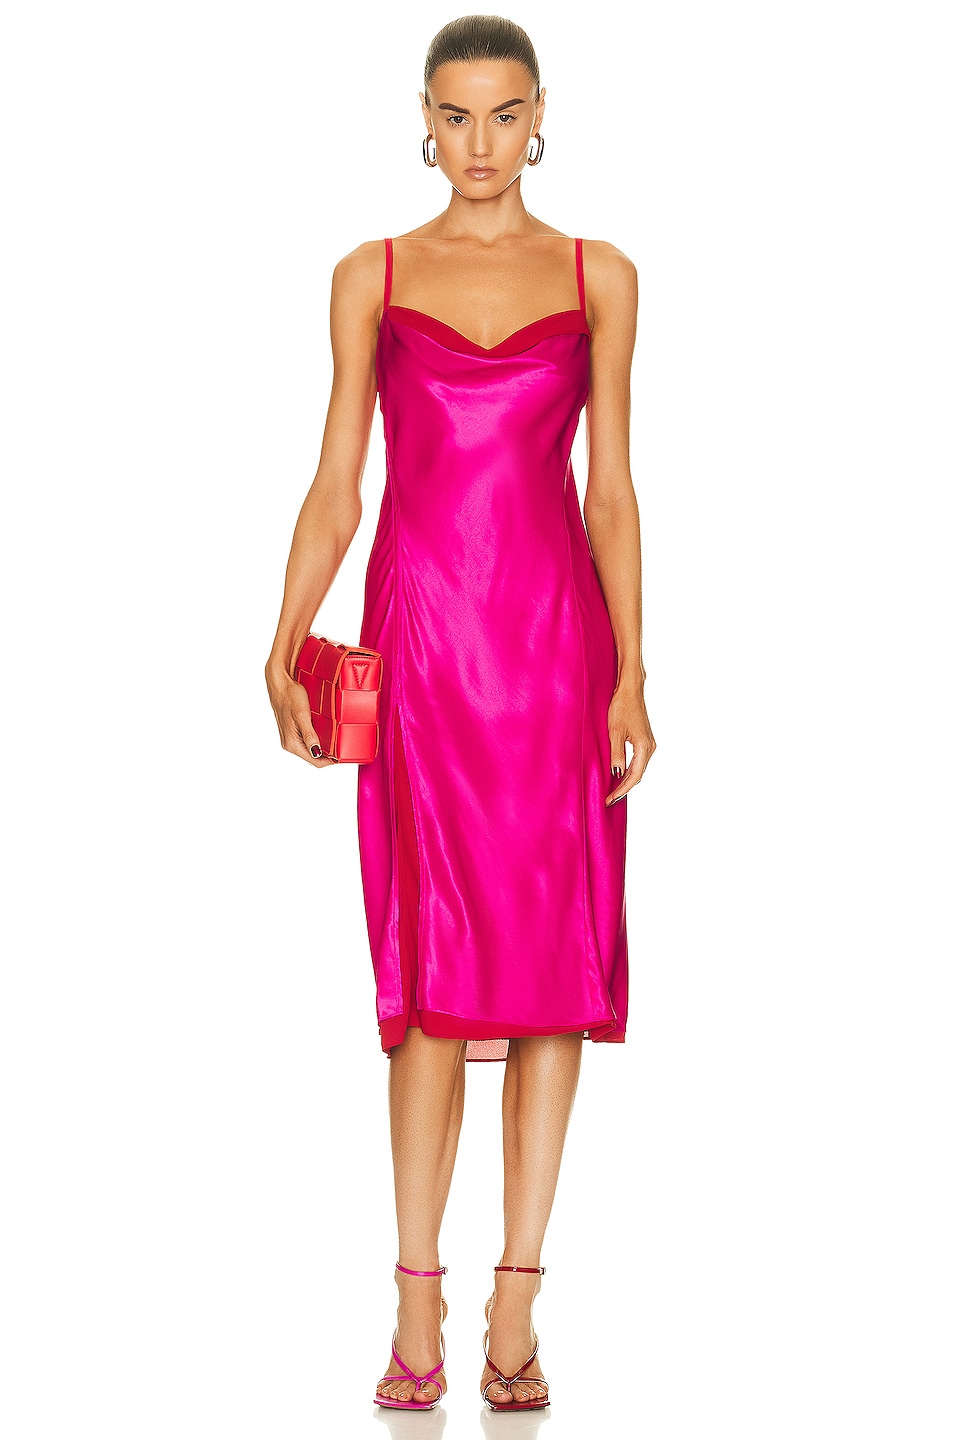 Acne Studios Cowl Neck Midi Dress in Fuchsia Pink | FWRD